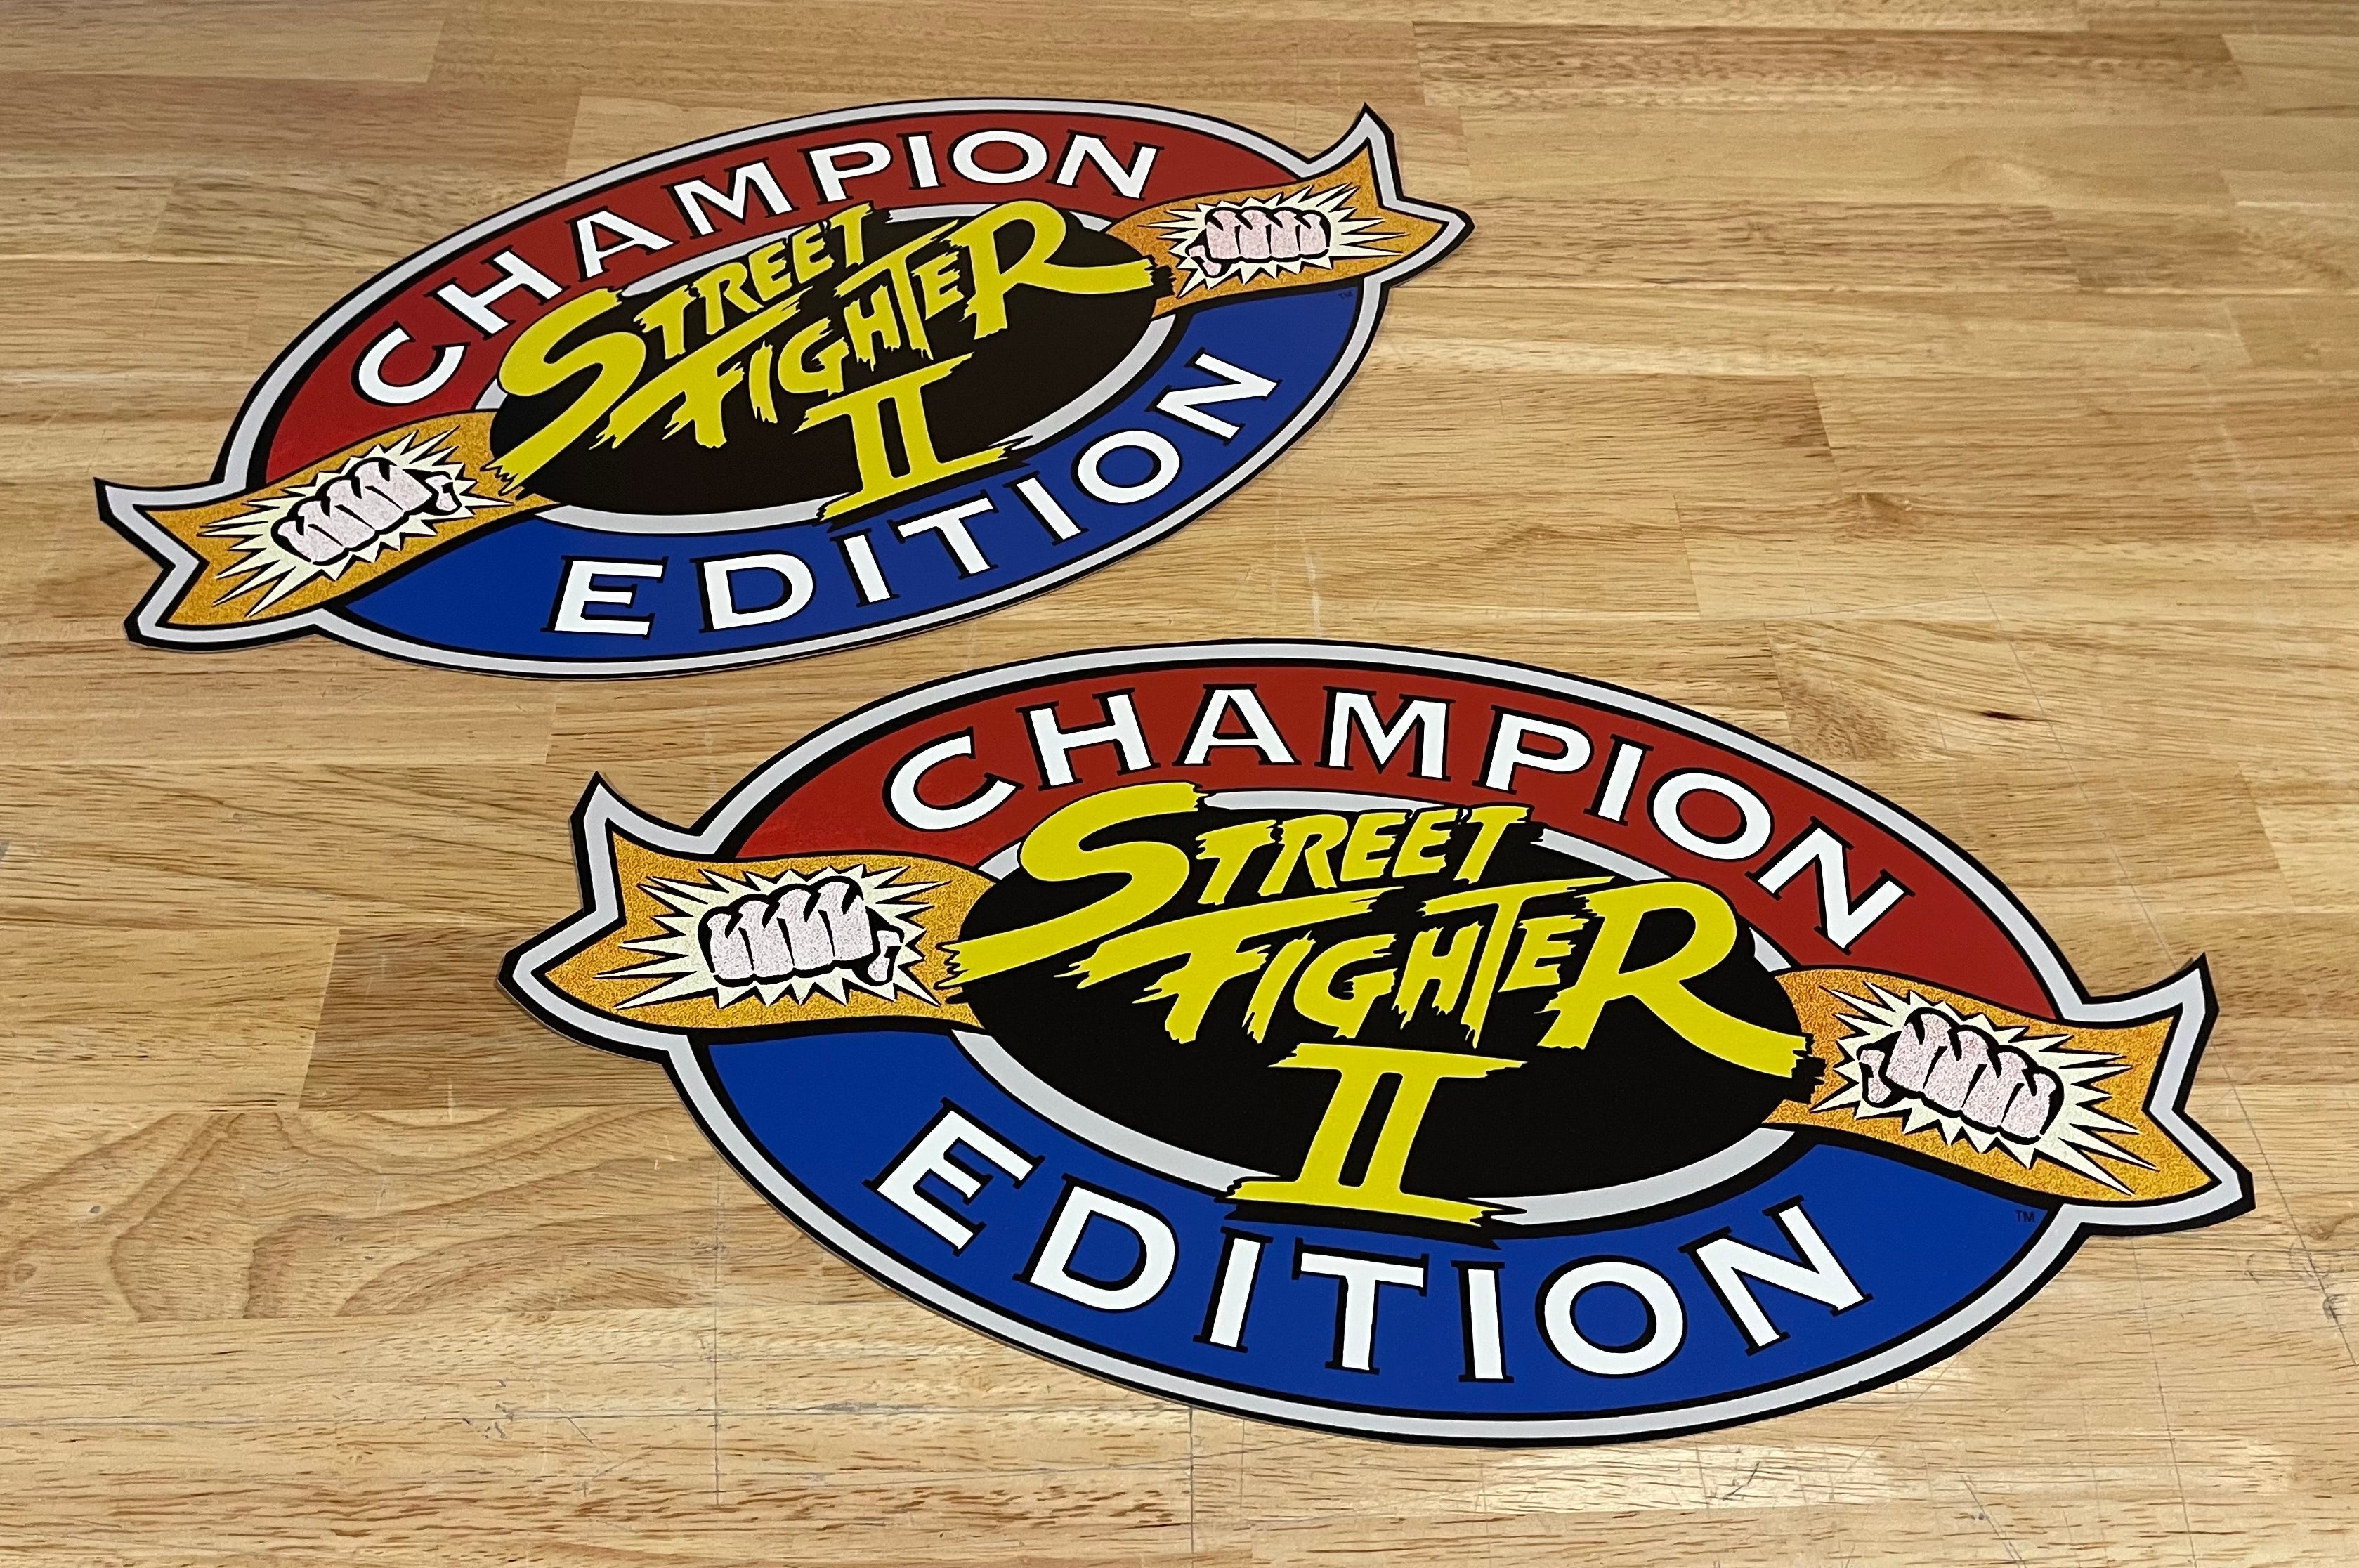 Arte lateral de Street Fighter 2 Champion Edition